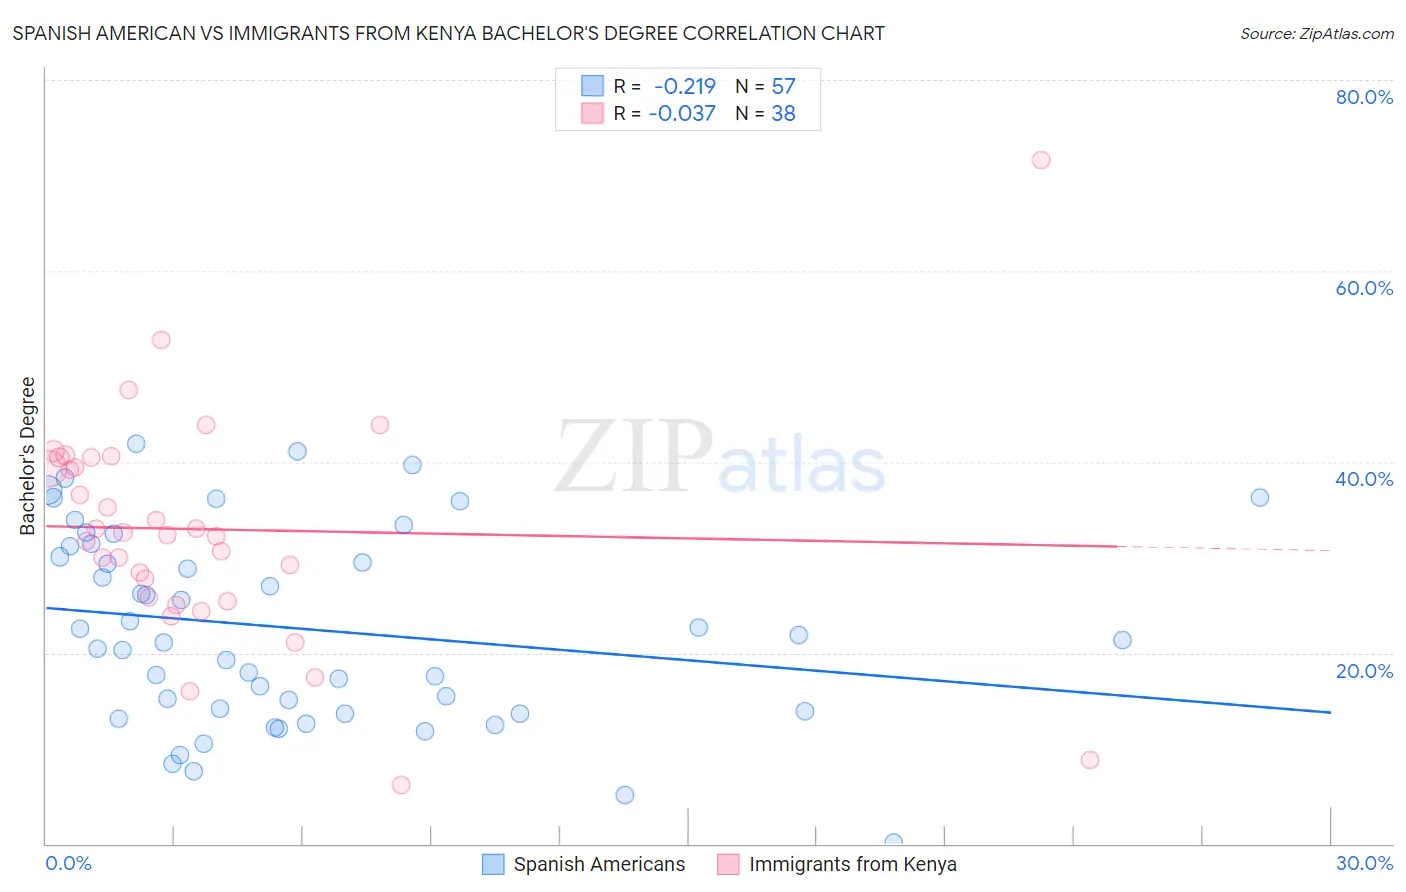 Spanish American vs Immigrants from Kenya Bachelor's Degree